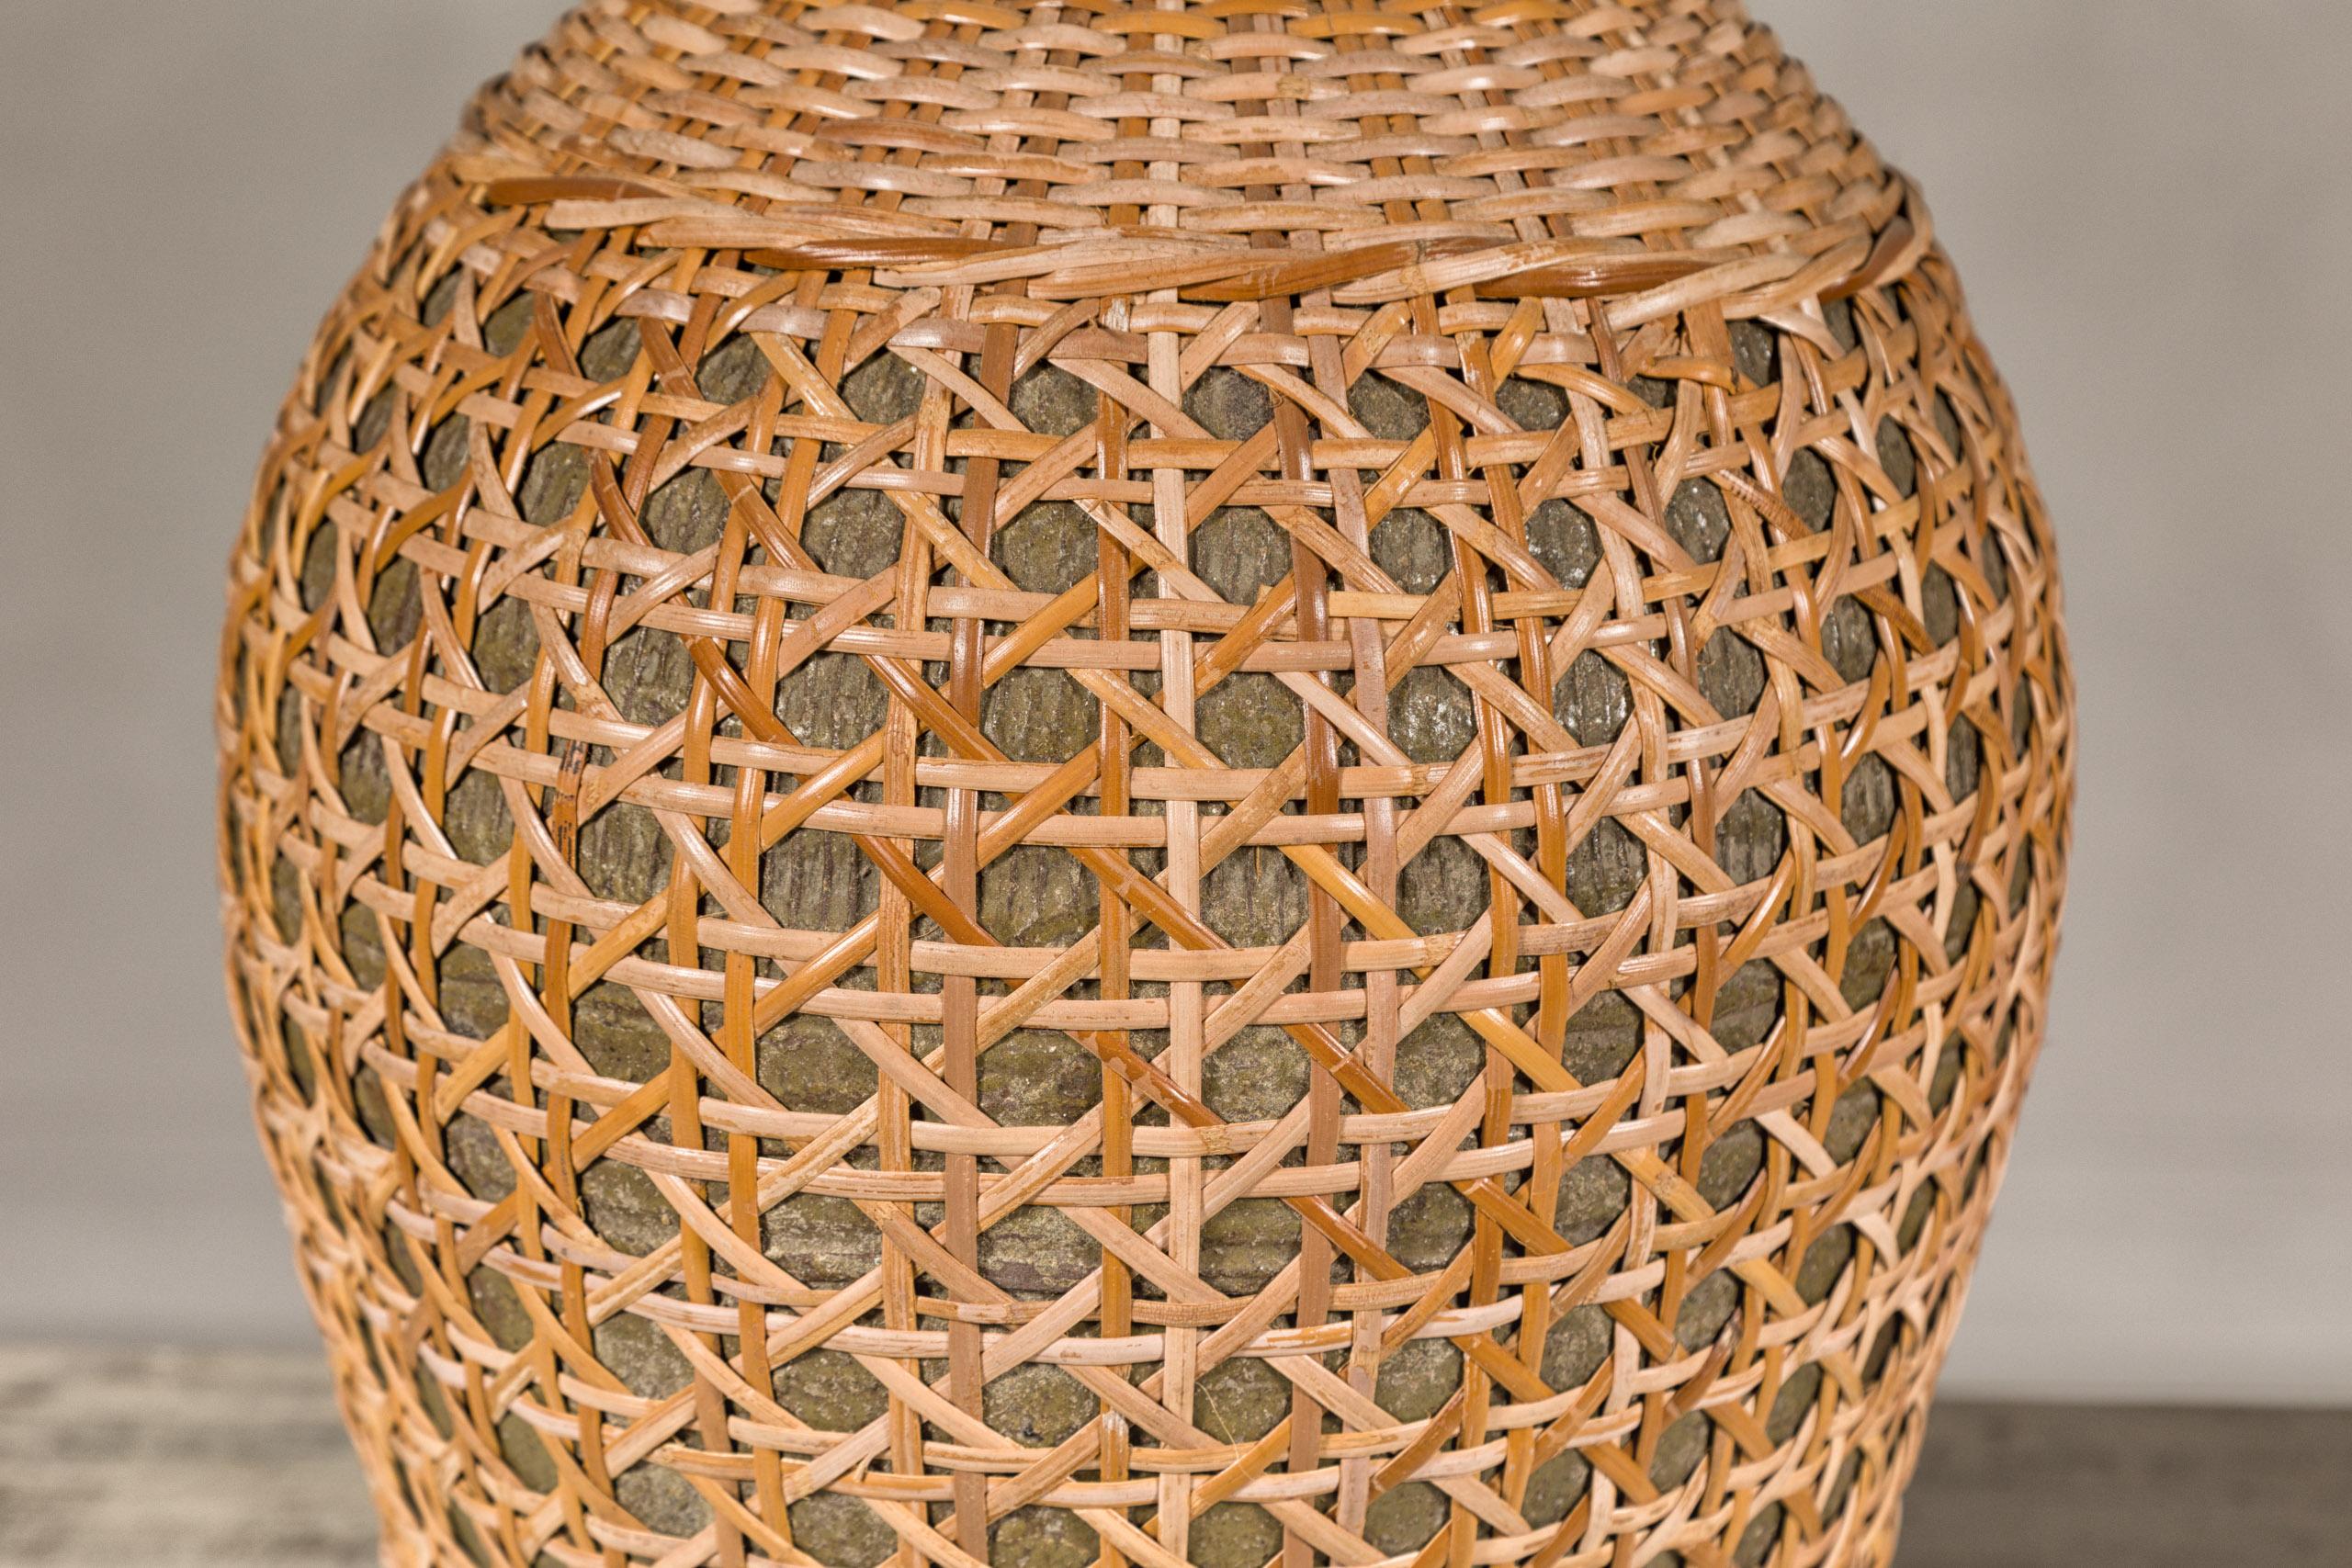 Rustic Pair of Midcentury Wicker Vases Made of Cane over Ceramic 1